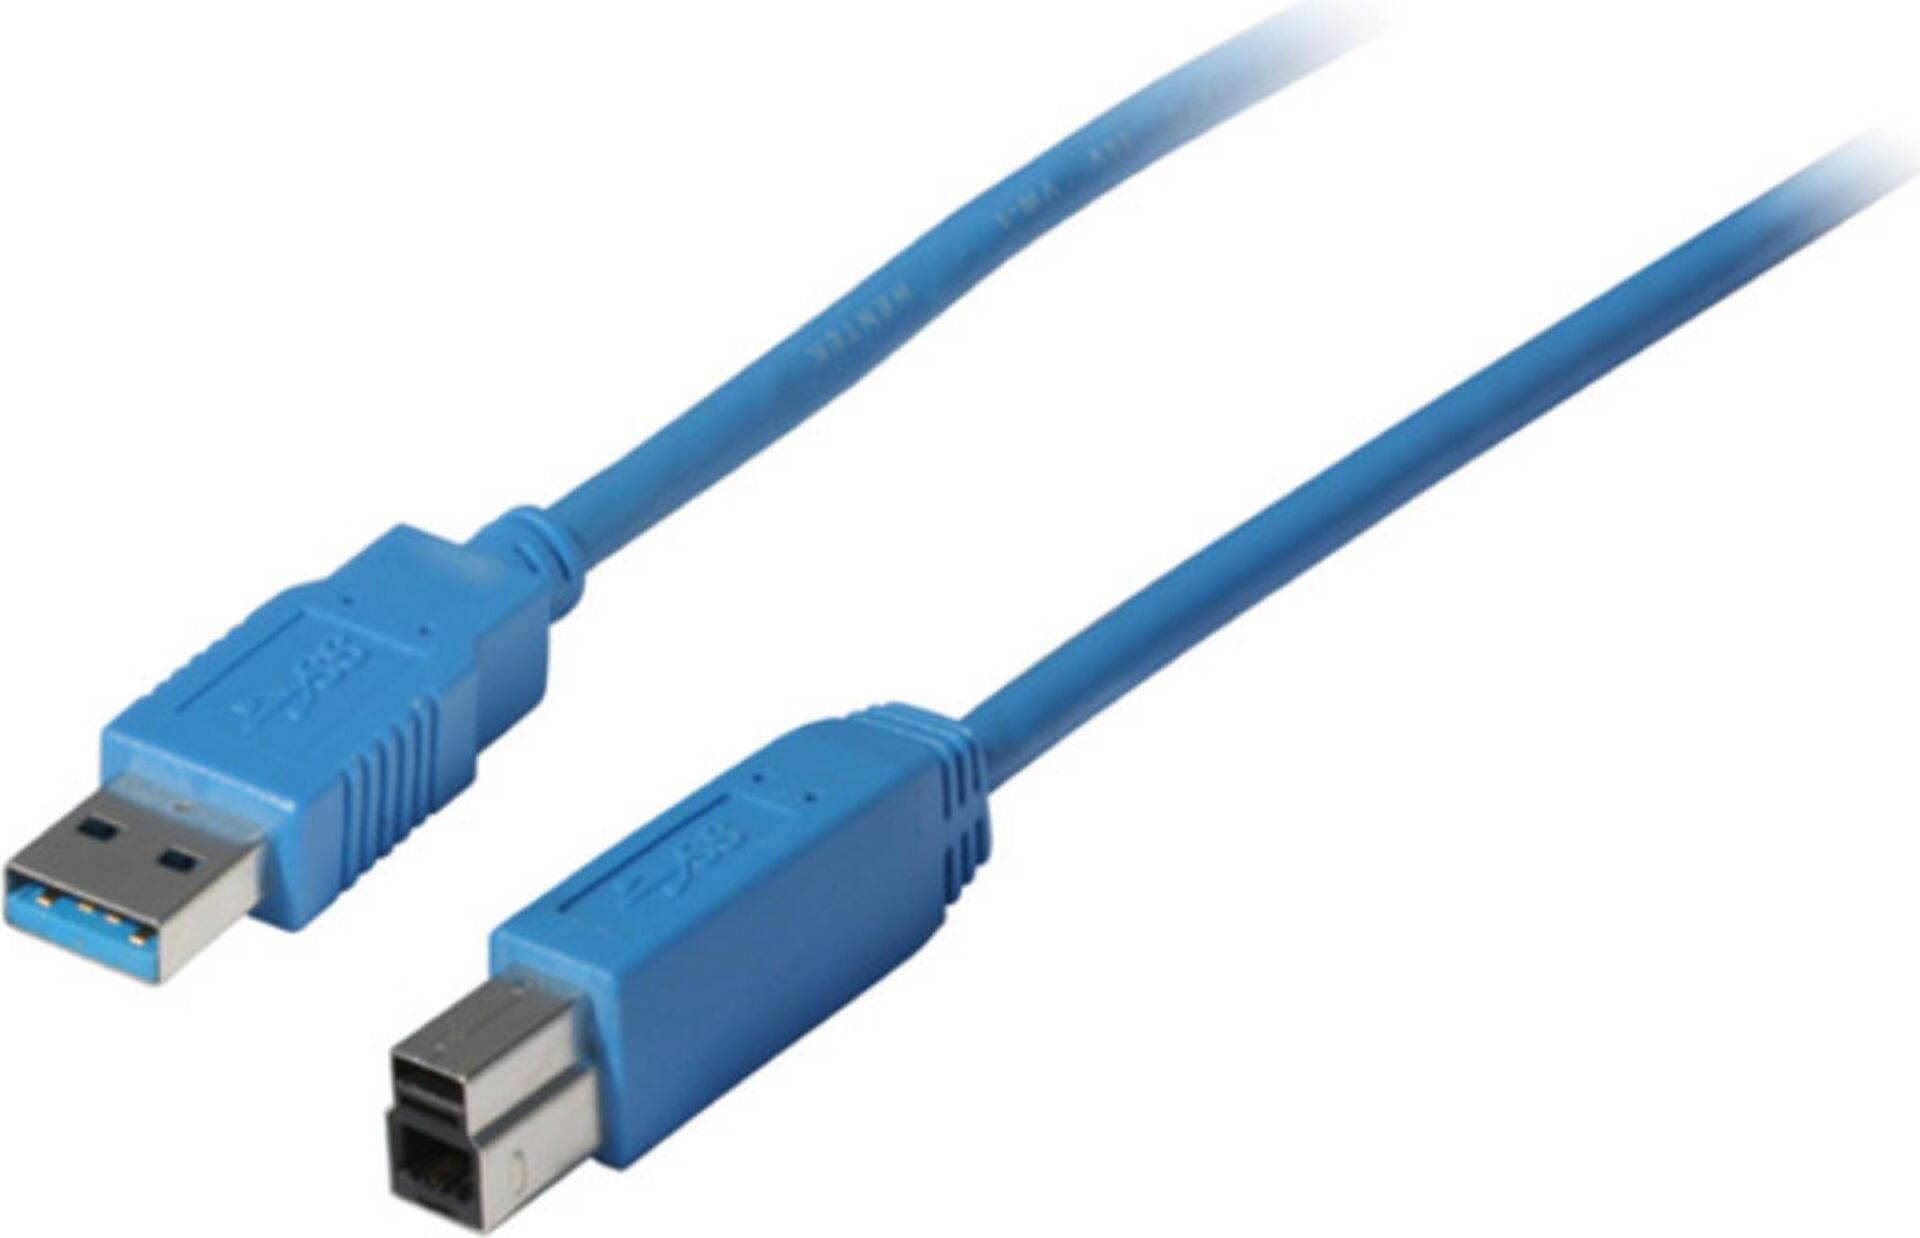 S-CONN S/CONN maximum connectivity USB Kabel, Typ A Stecker auf Typ B Stecker, USB 3.0, blau, 0,5m (